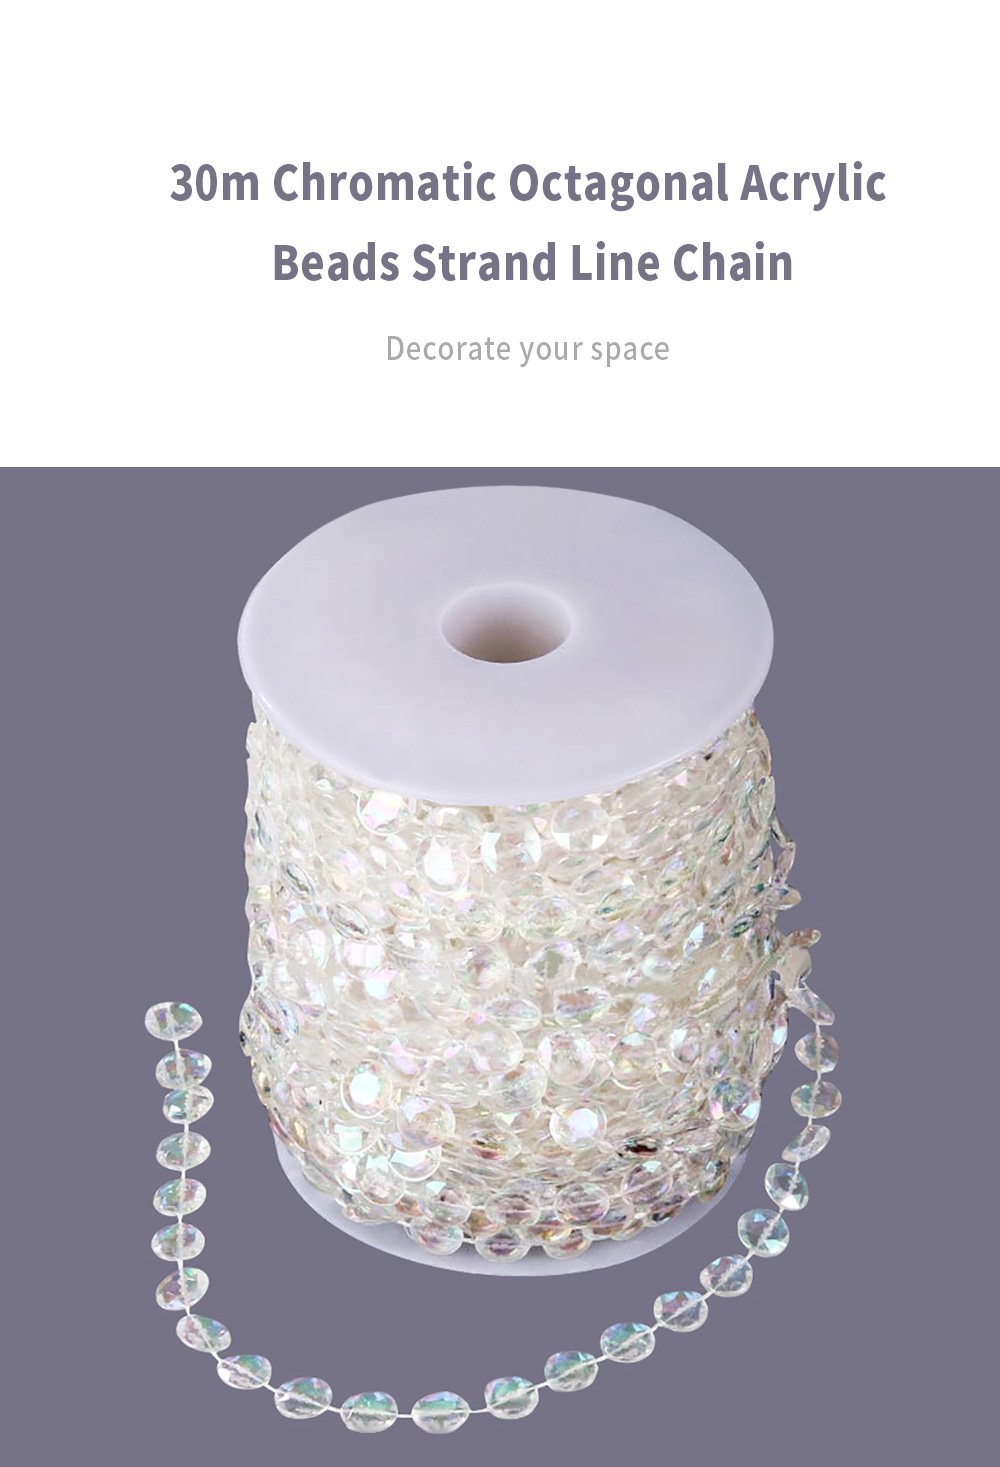 30m Chromatic Octagonal Acrylic Beads Strand Line Chain